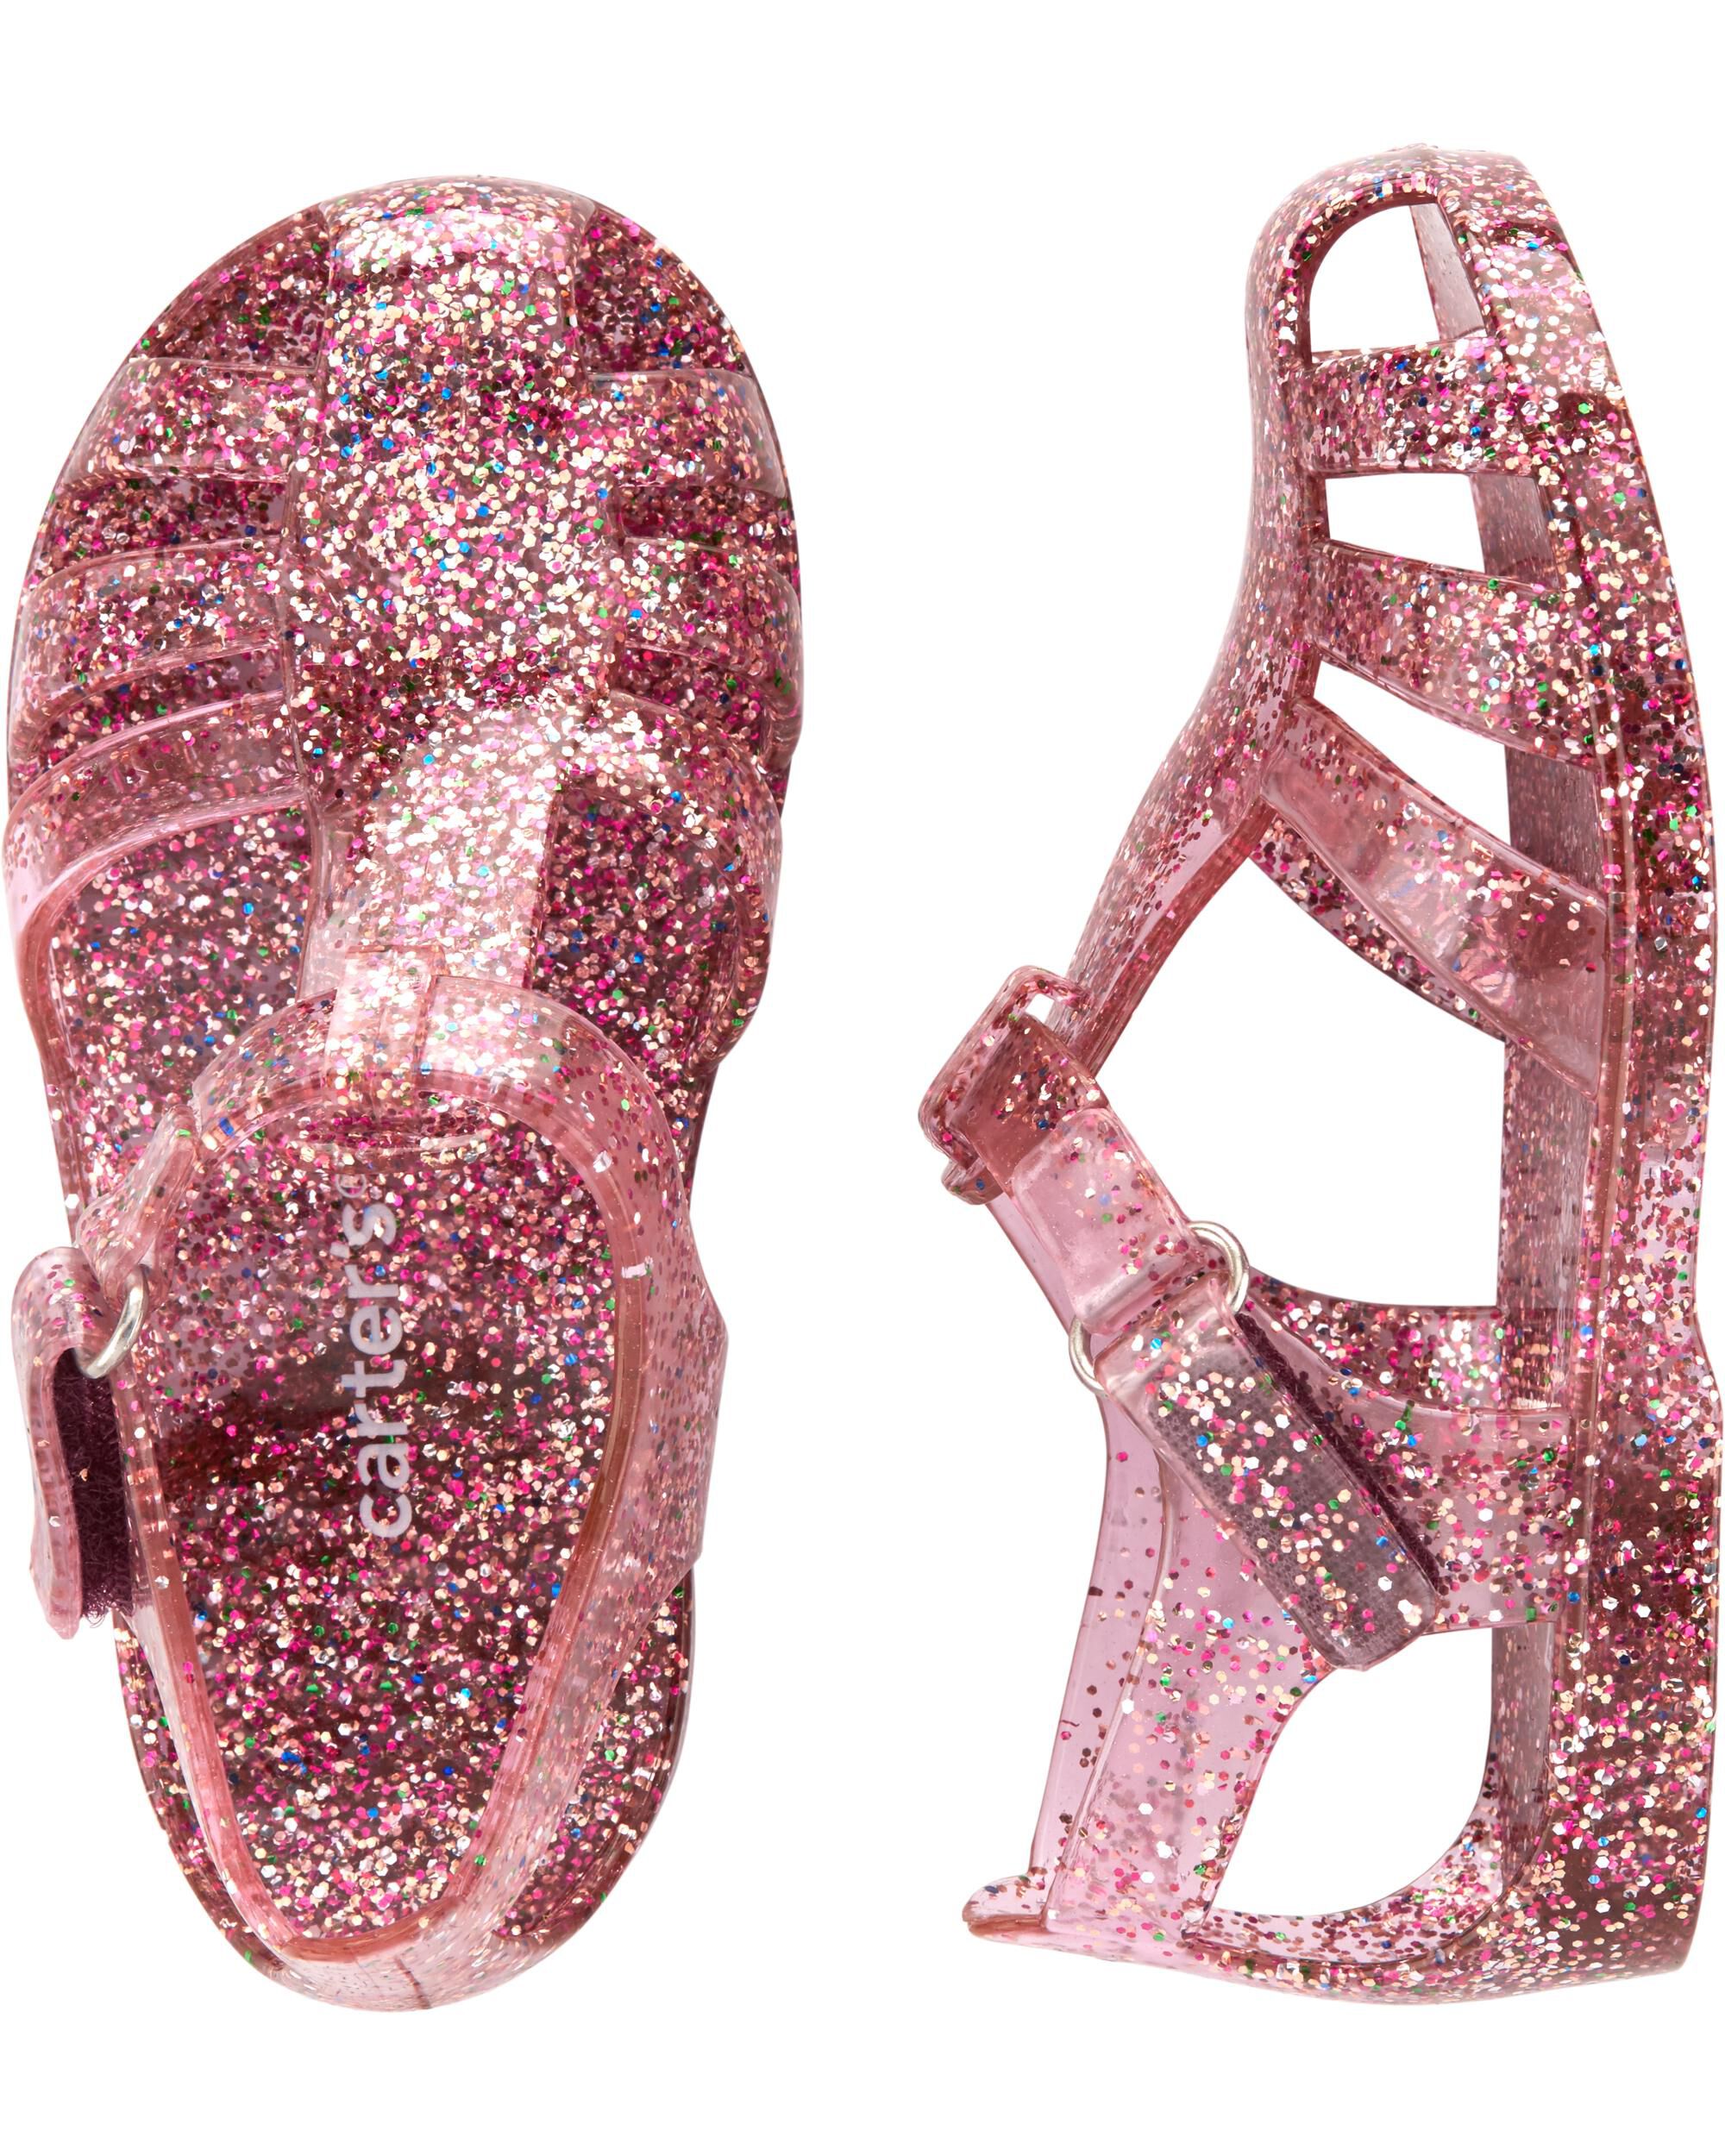 carter's glitter shoes